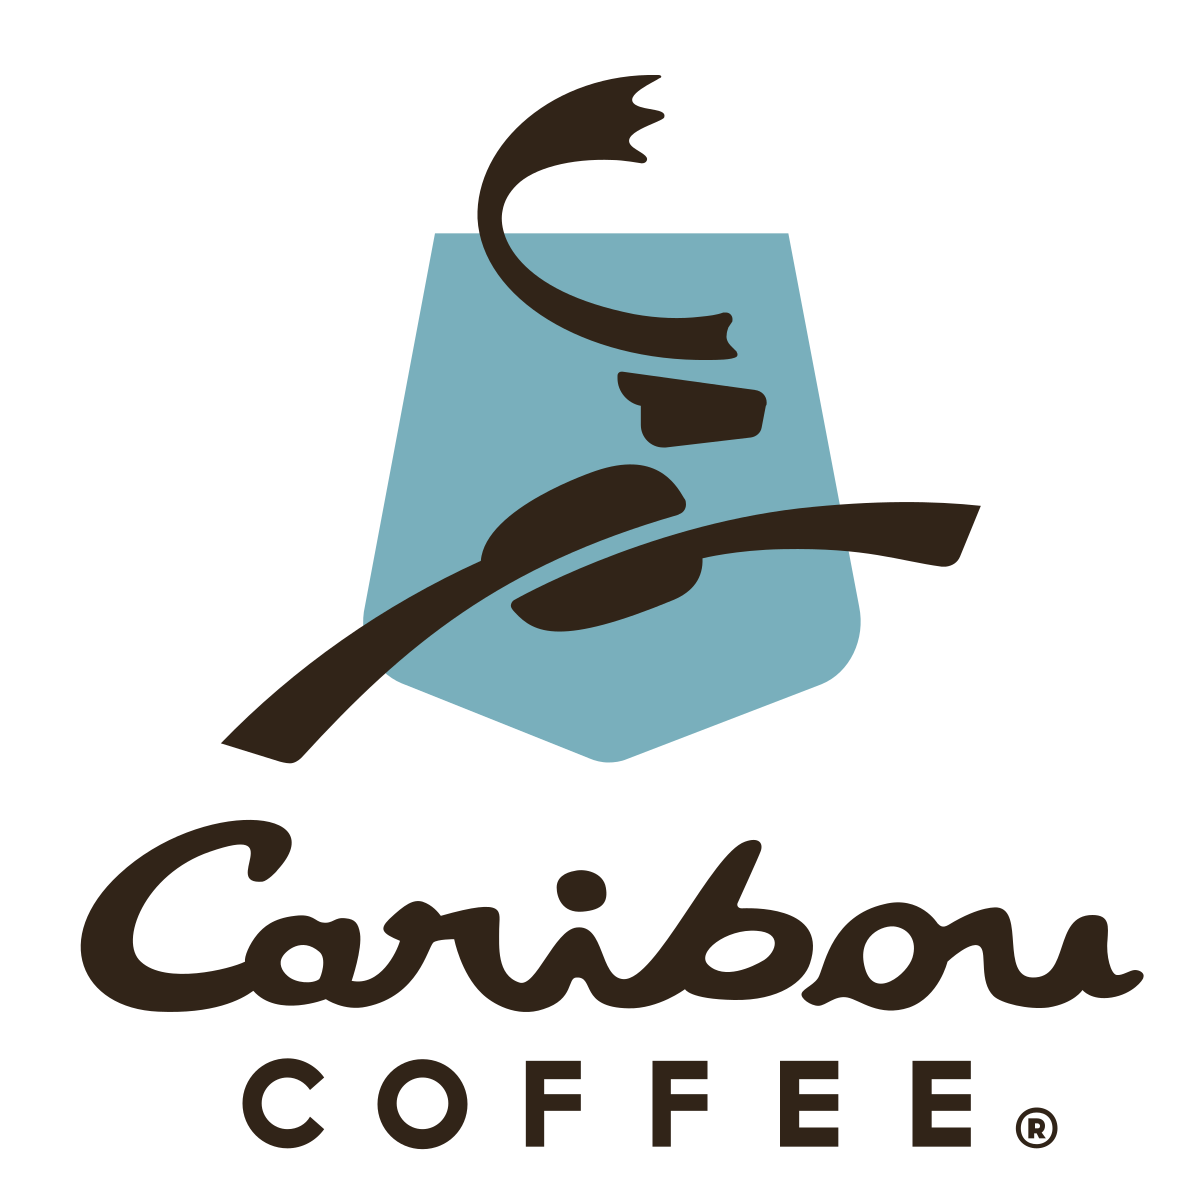 Caribou Coffee logo image